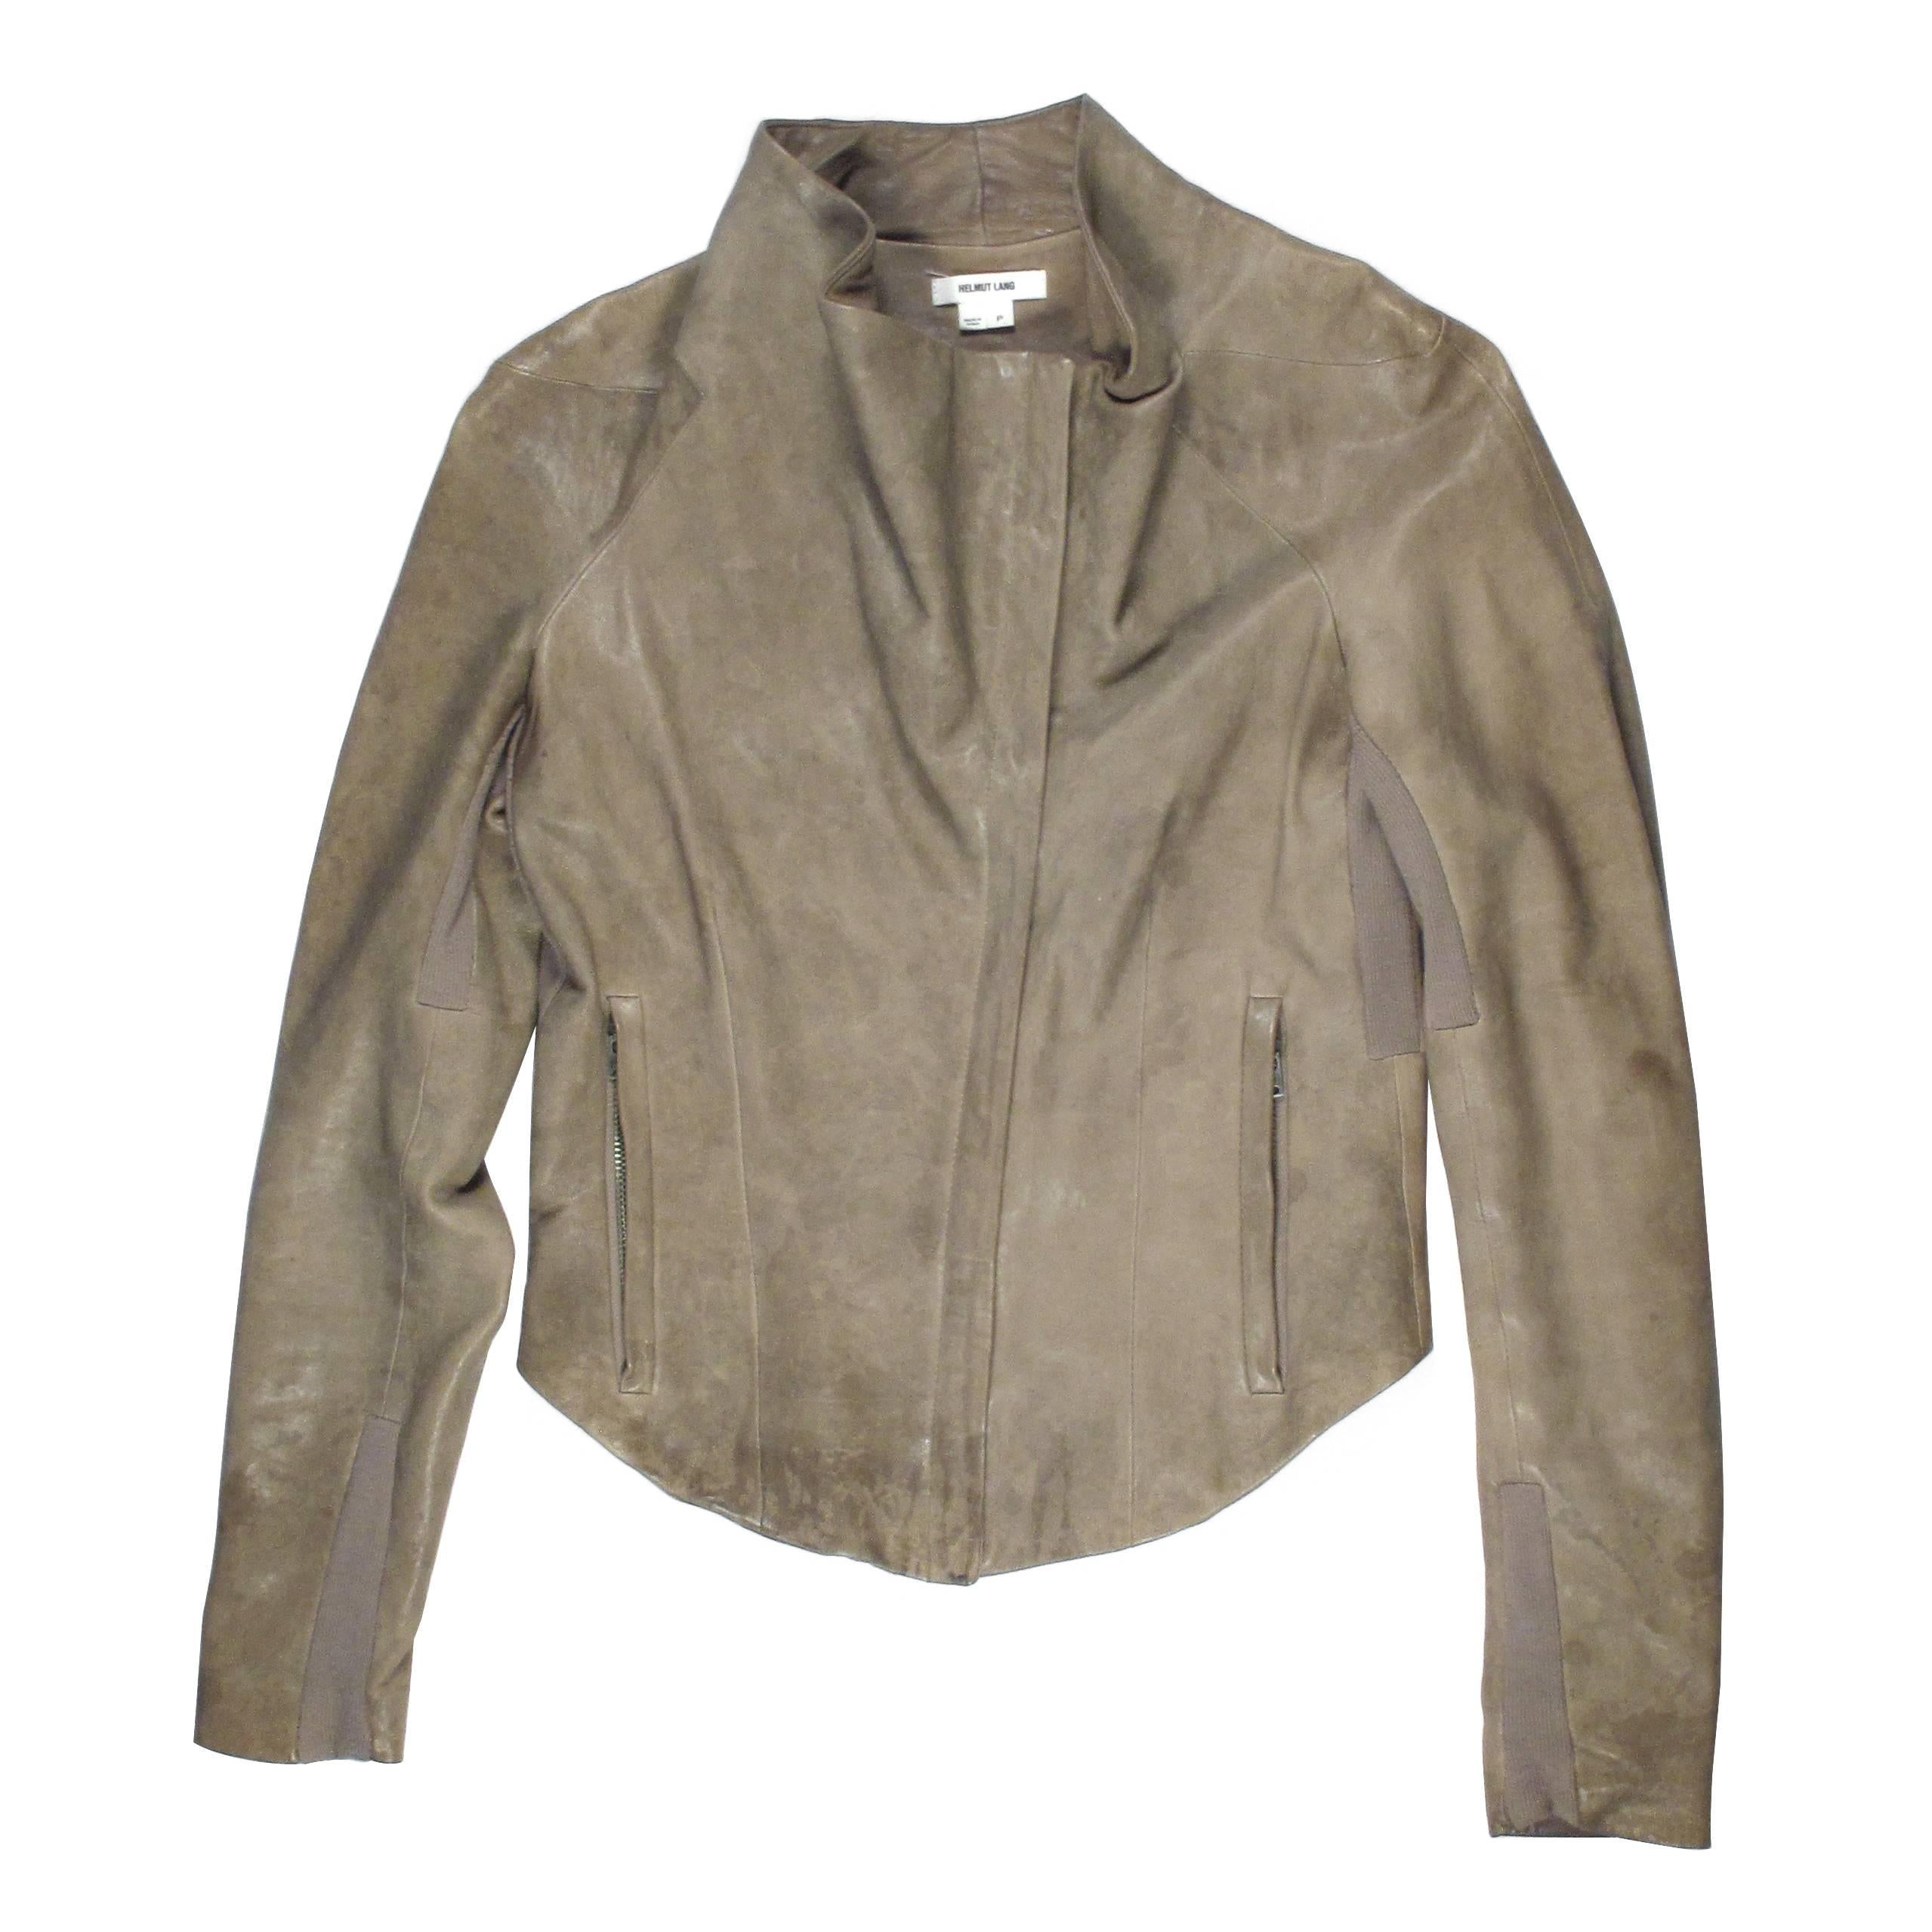 Helmut Lang Leather Jacket - Small - $1500 Tan Lamb Silk Moto Motorcycle Coat